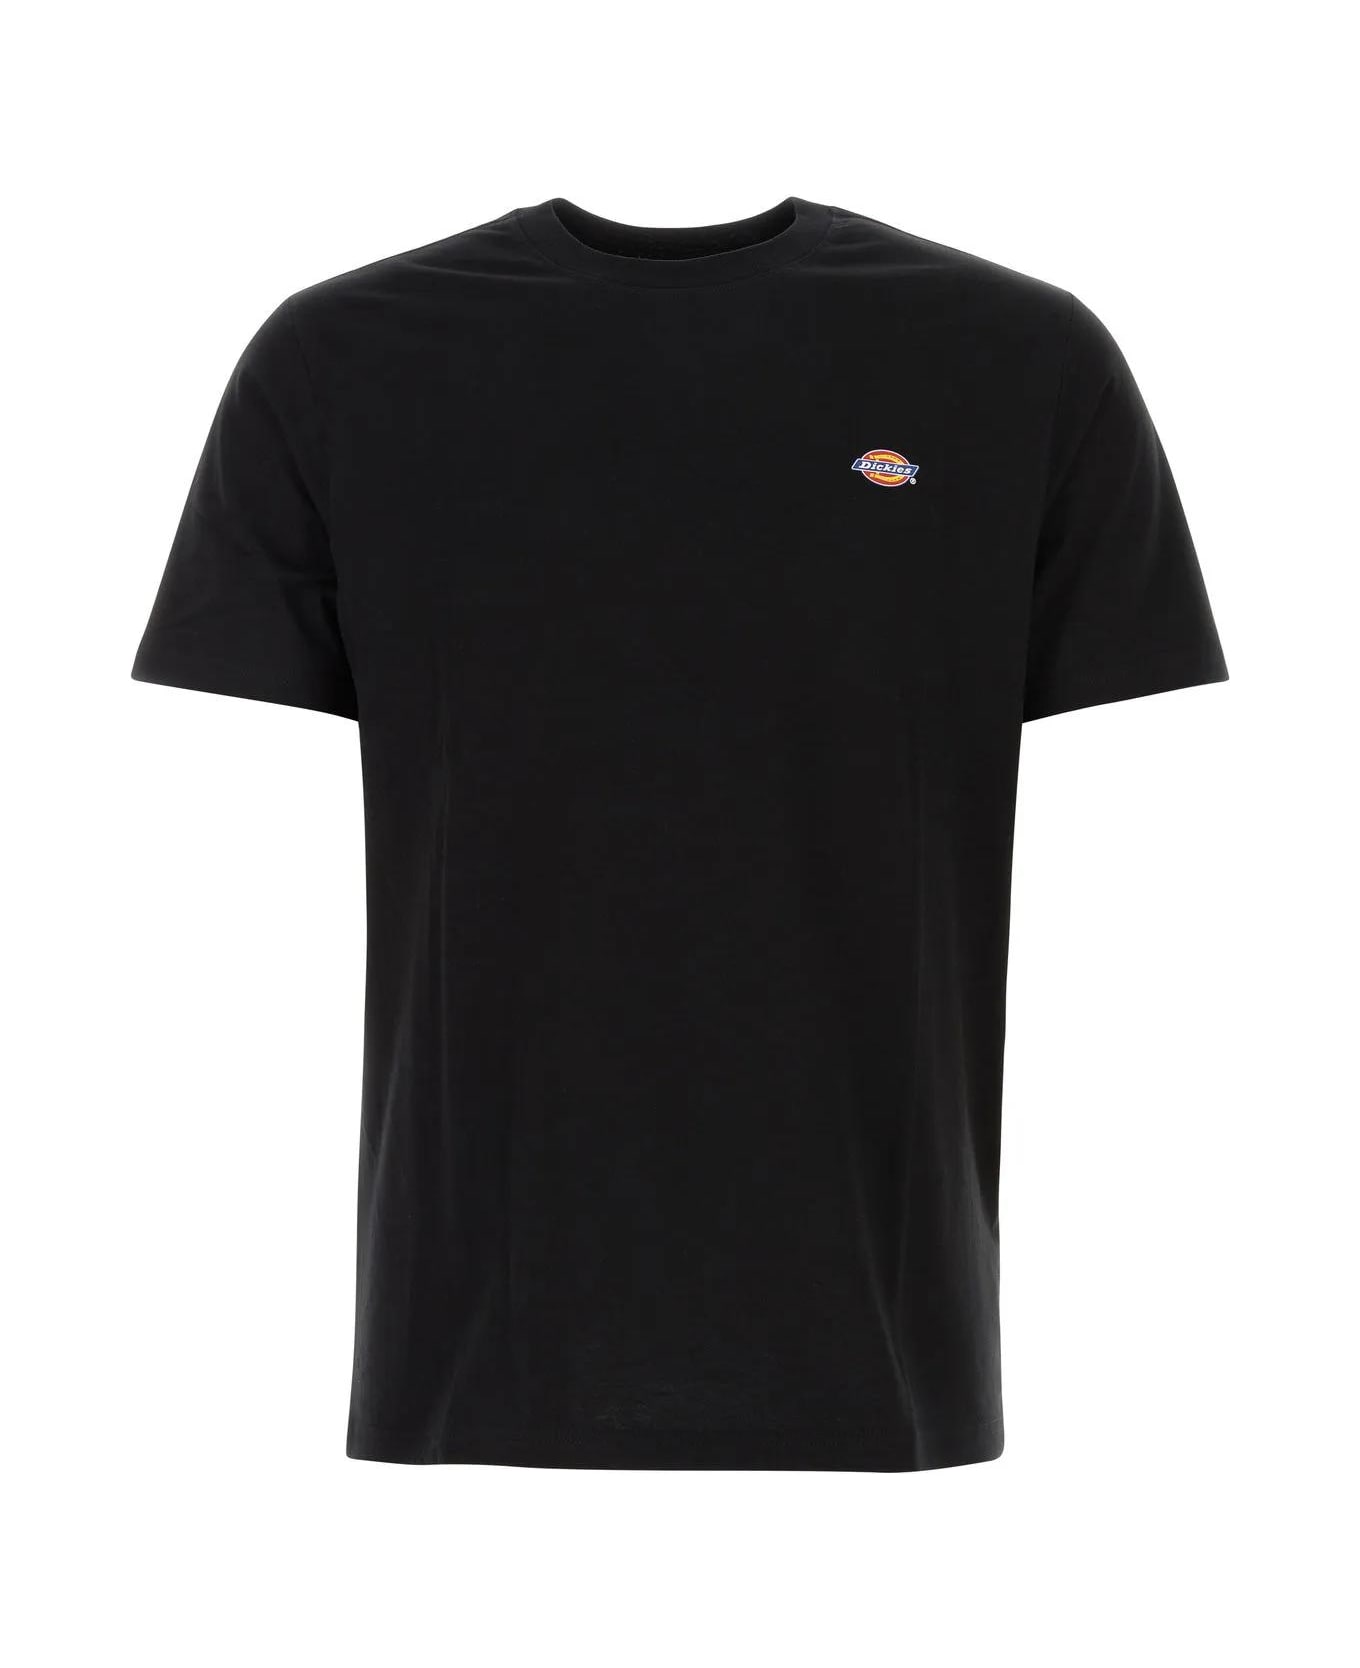 Dickies Black Cotton T-shirt - Nero